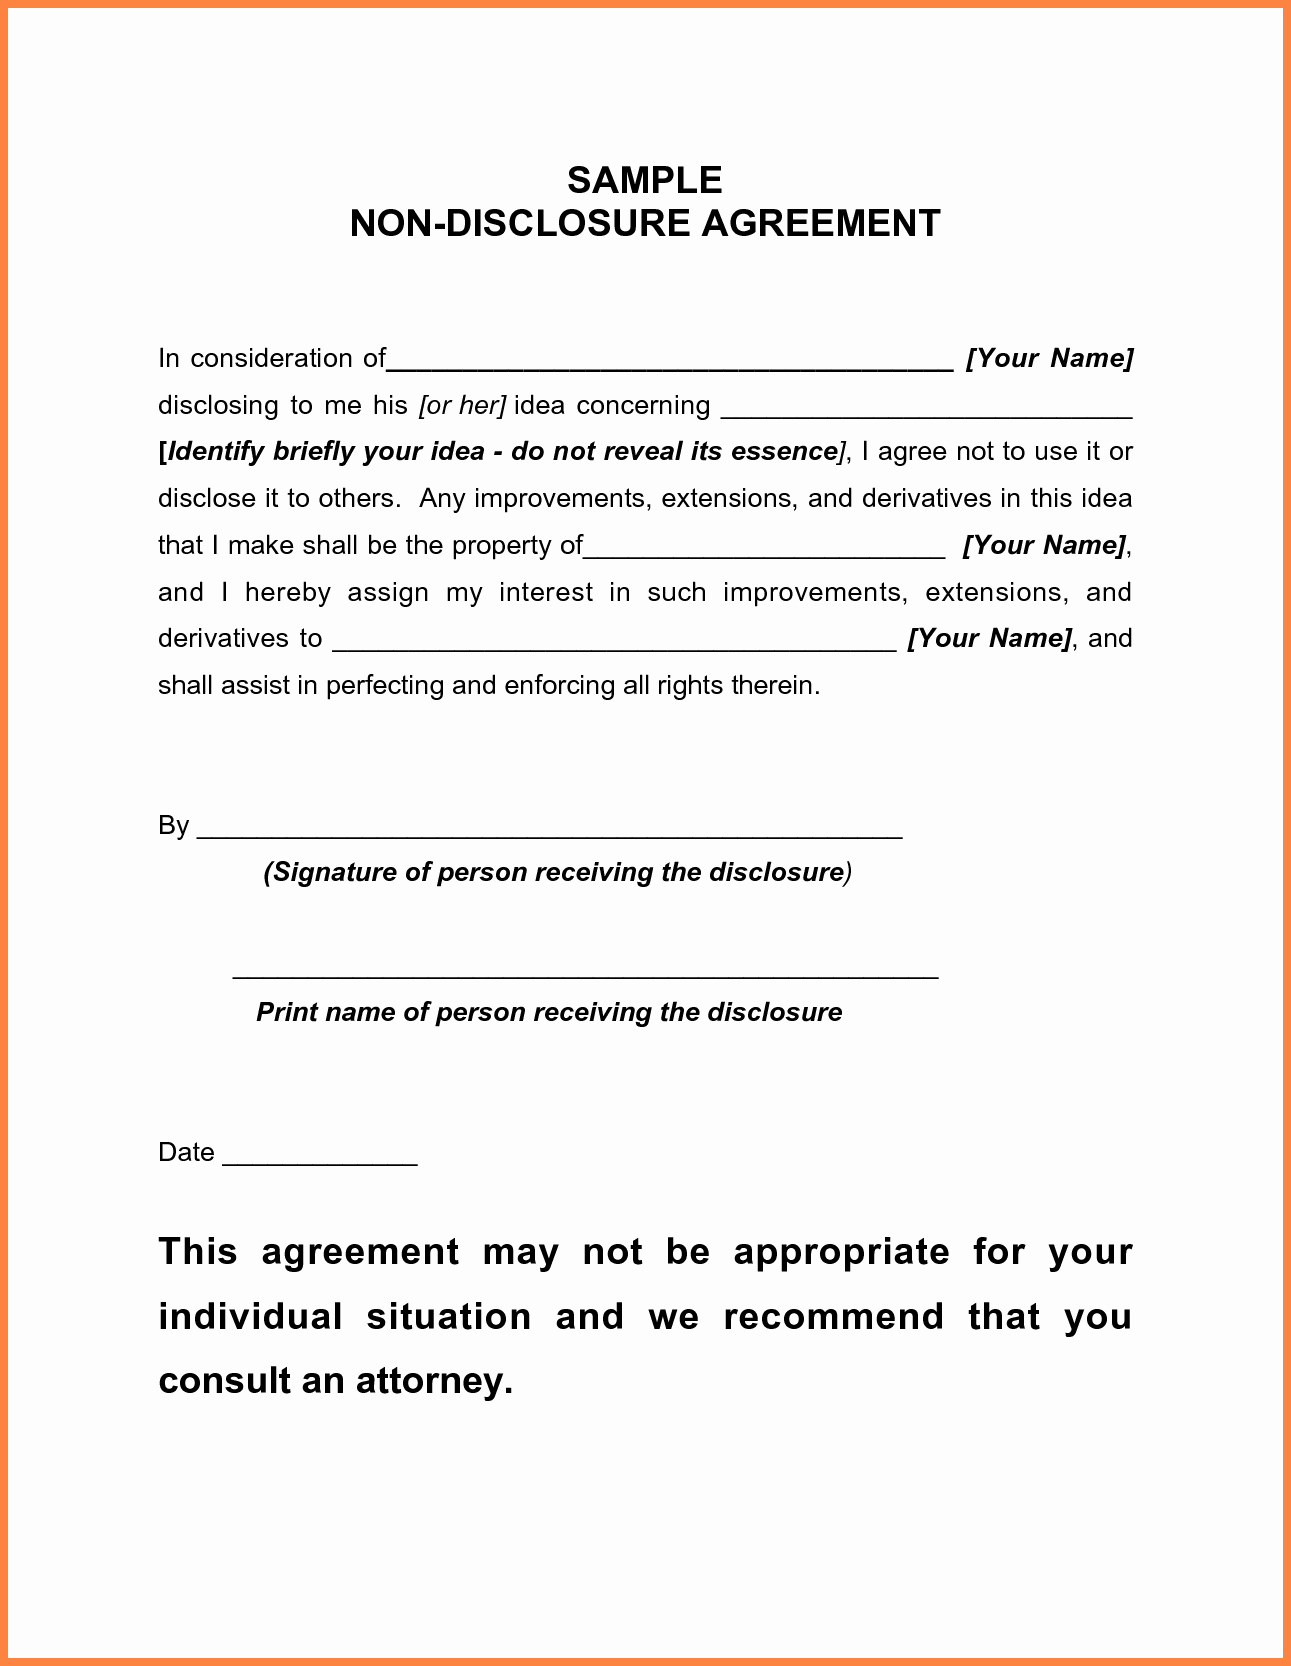 Standard Non Disclosure Agreement Pdf 011 Free Confidentiality Agreement Template Uk Stupendous Ideas Non